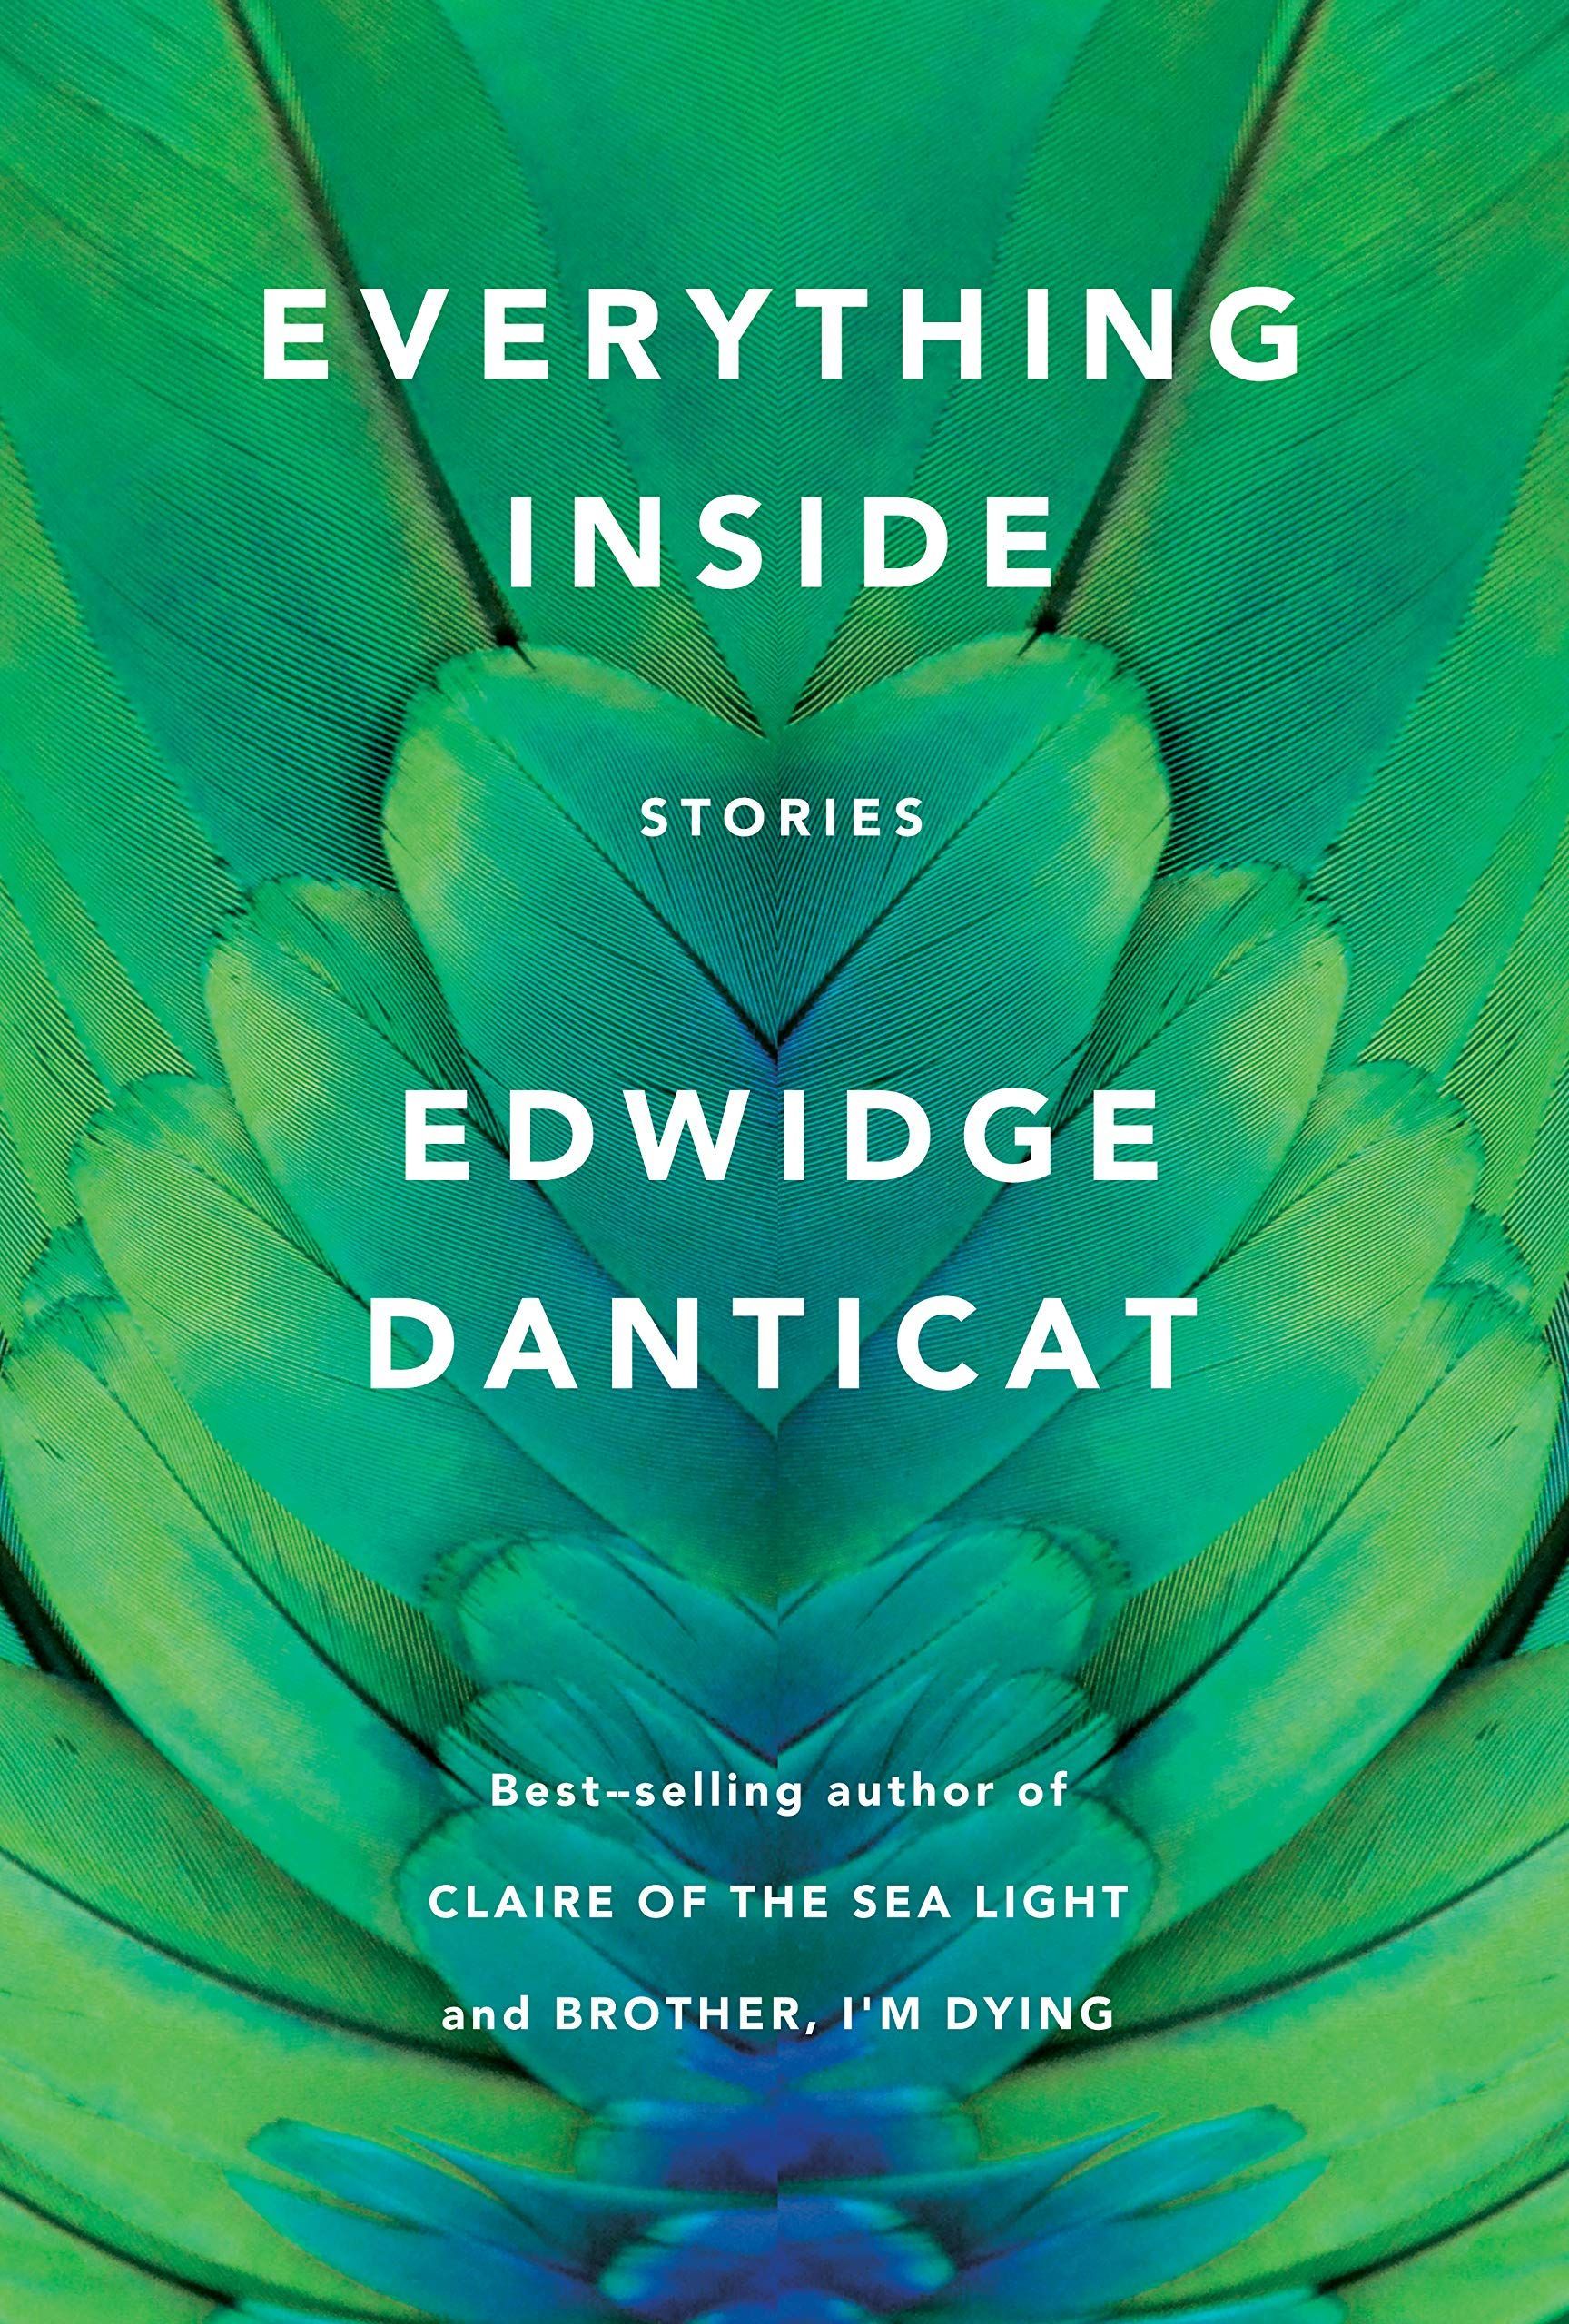 Sunrise Over Maafa: On Edwidge Danticat’s “Everything Inside: Stories”